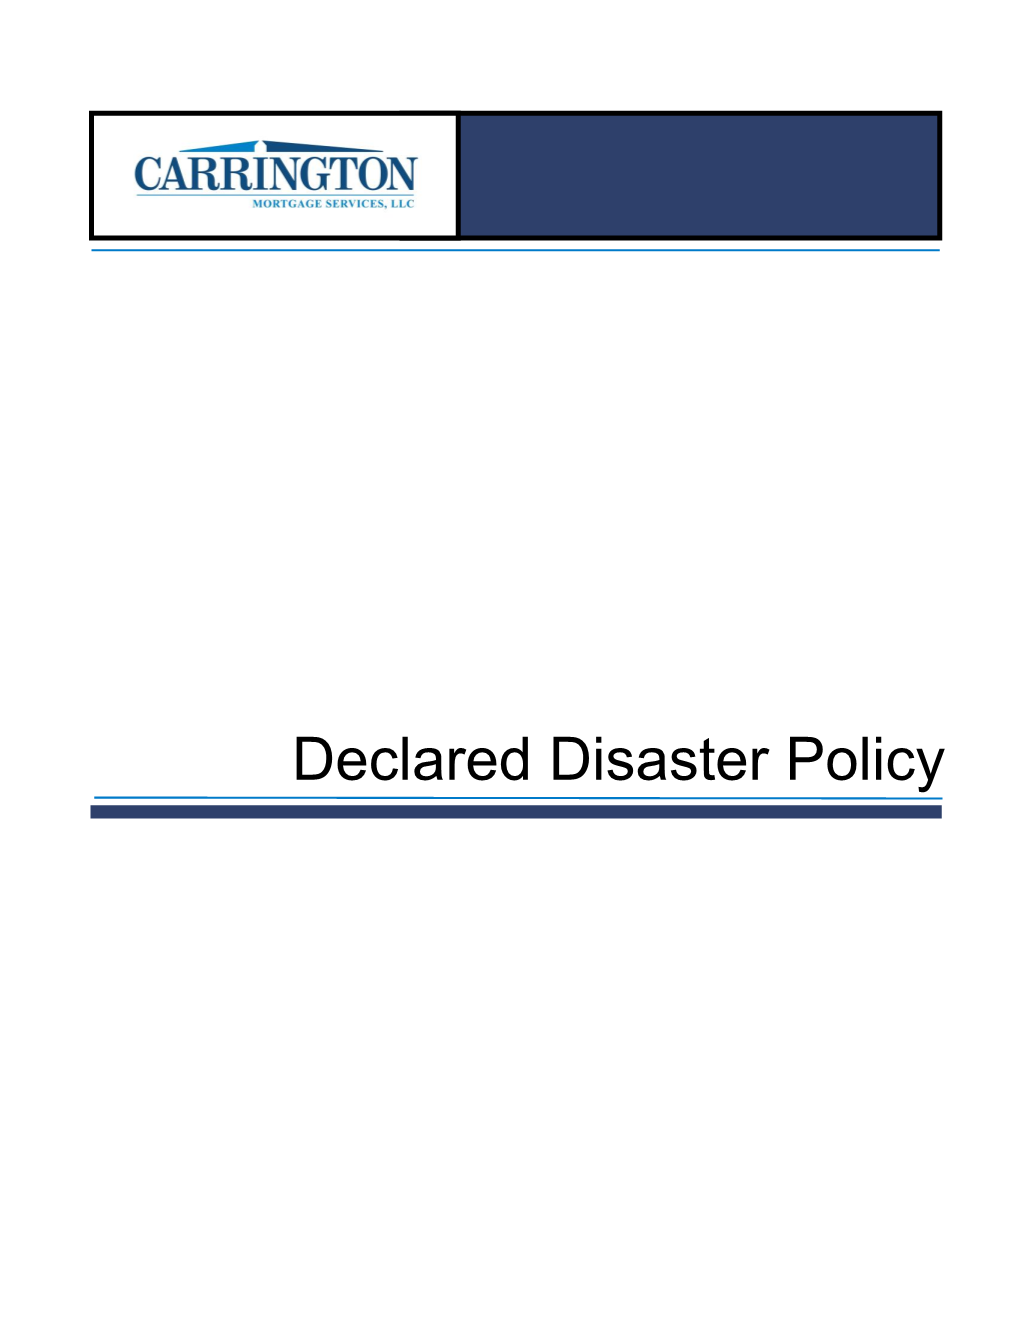 Declared Disaster Policy Declared Disaster Policy Mortgage Lending Division Version 2.1 – 03/02/21